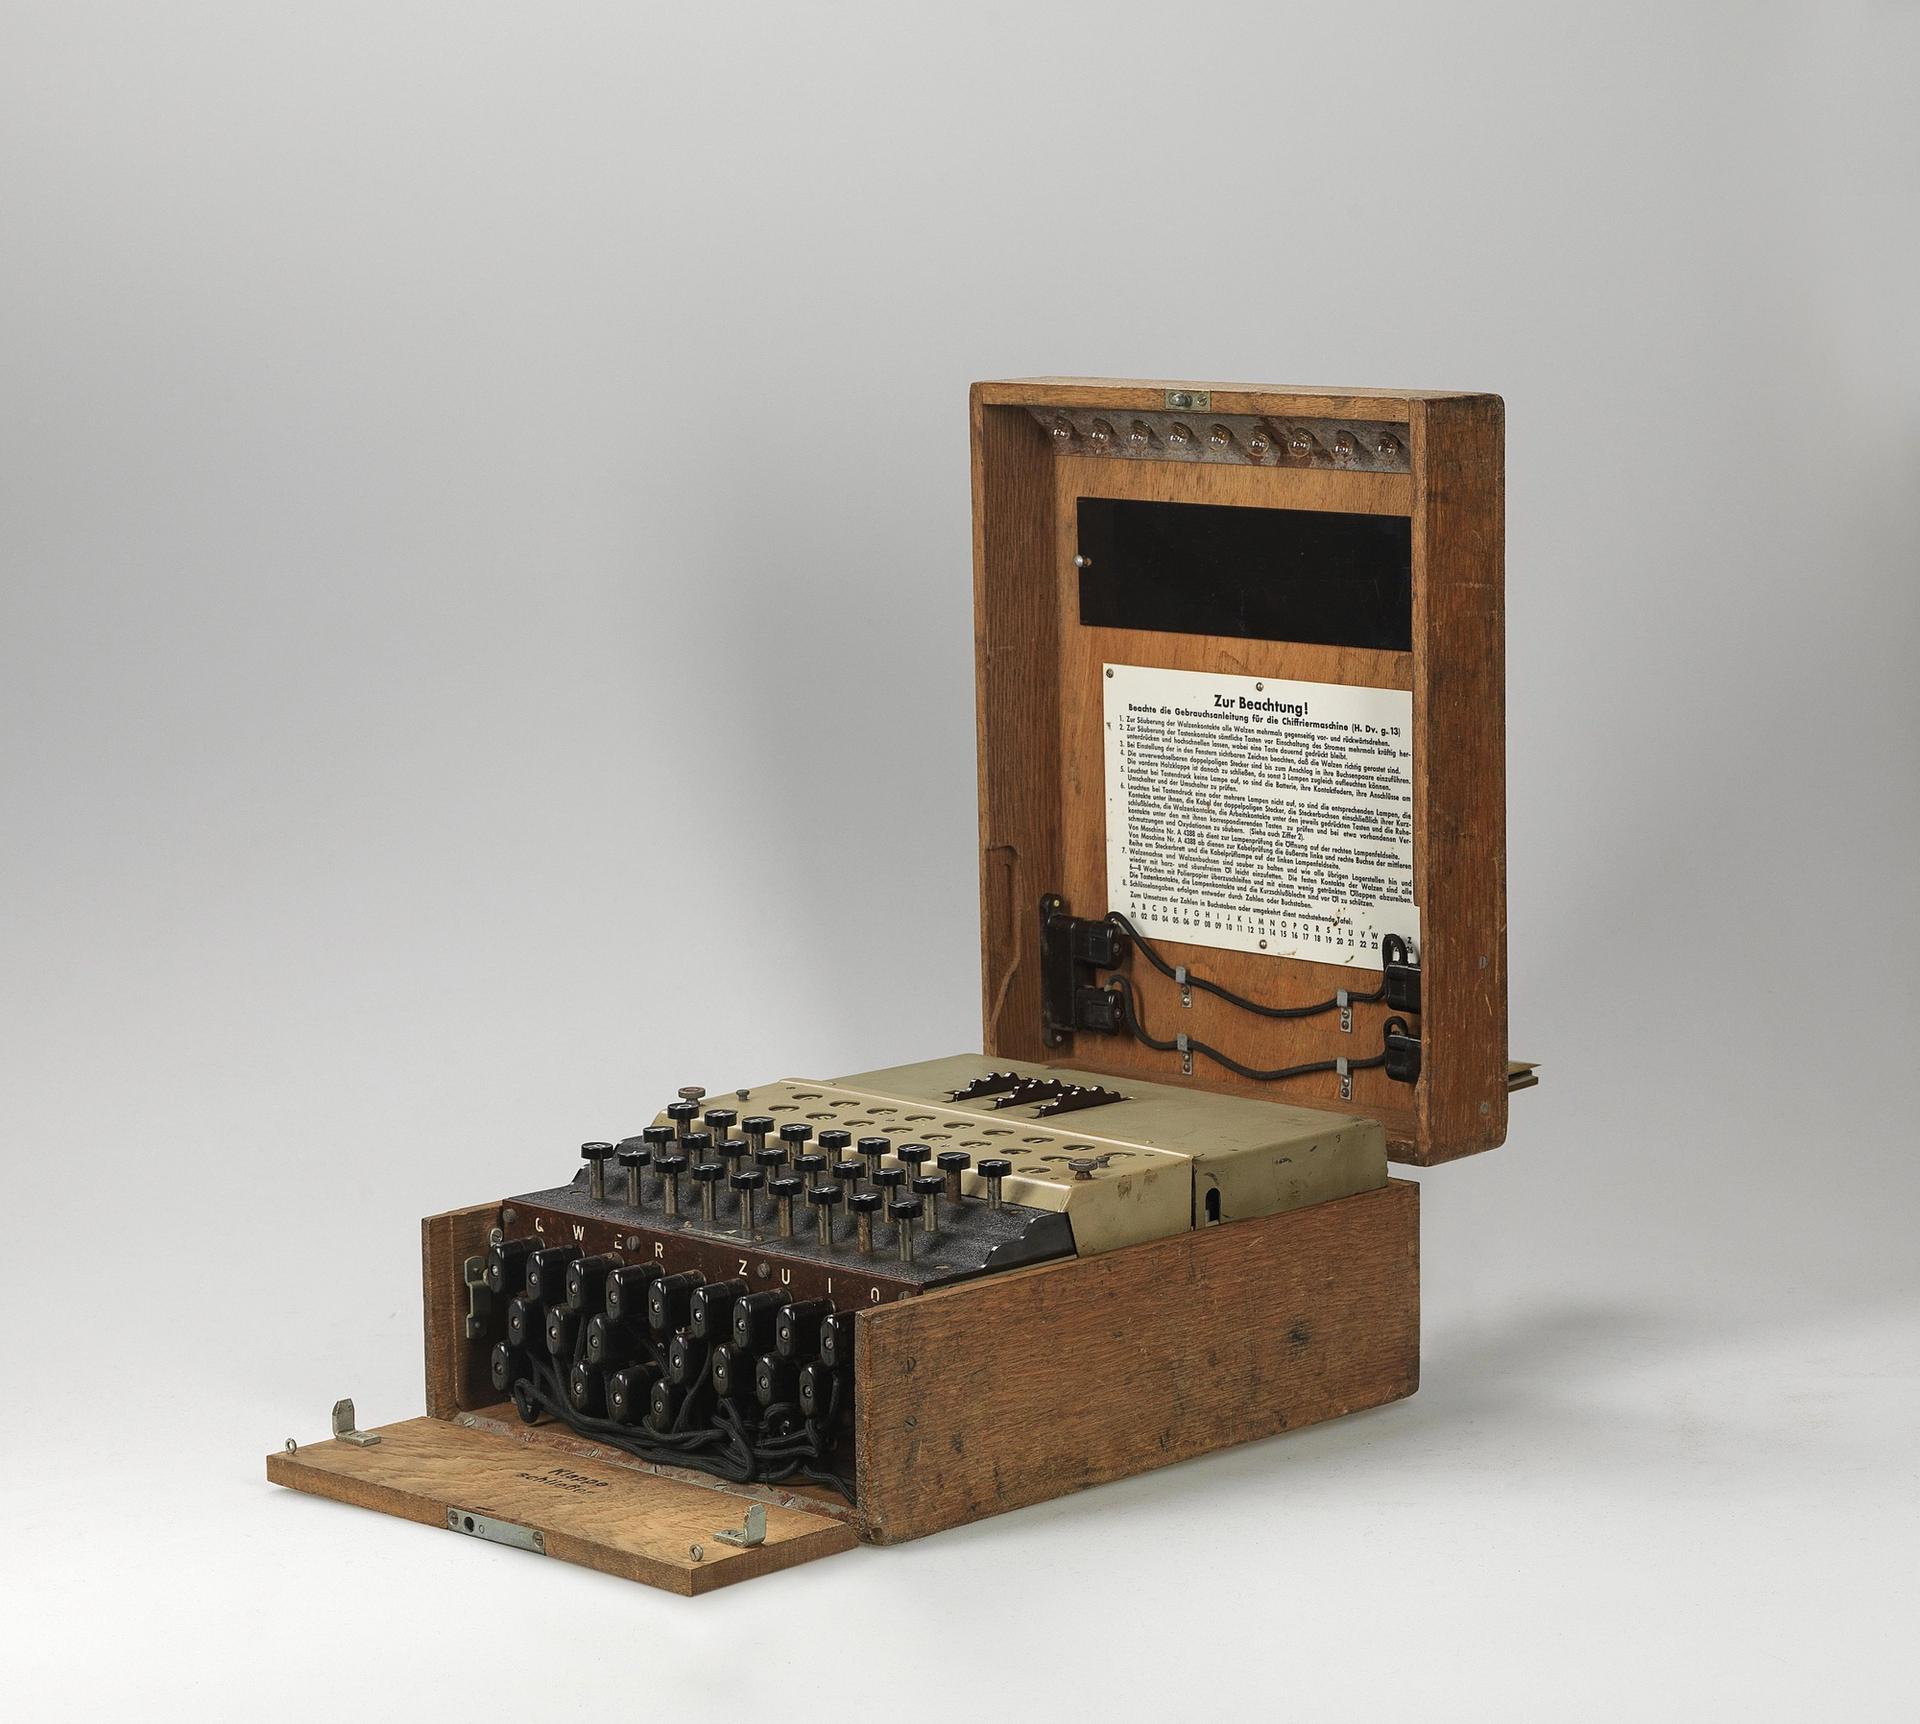 Enigma I, a rare German three-rotor encryption machine (1944, est € 30,000–€40,000) Courtesy of Dorotheum